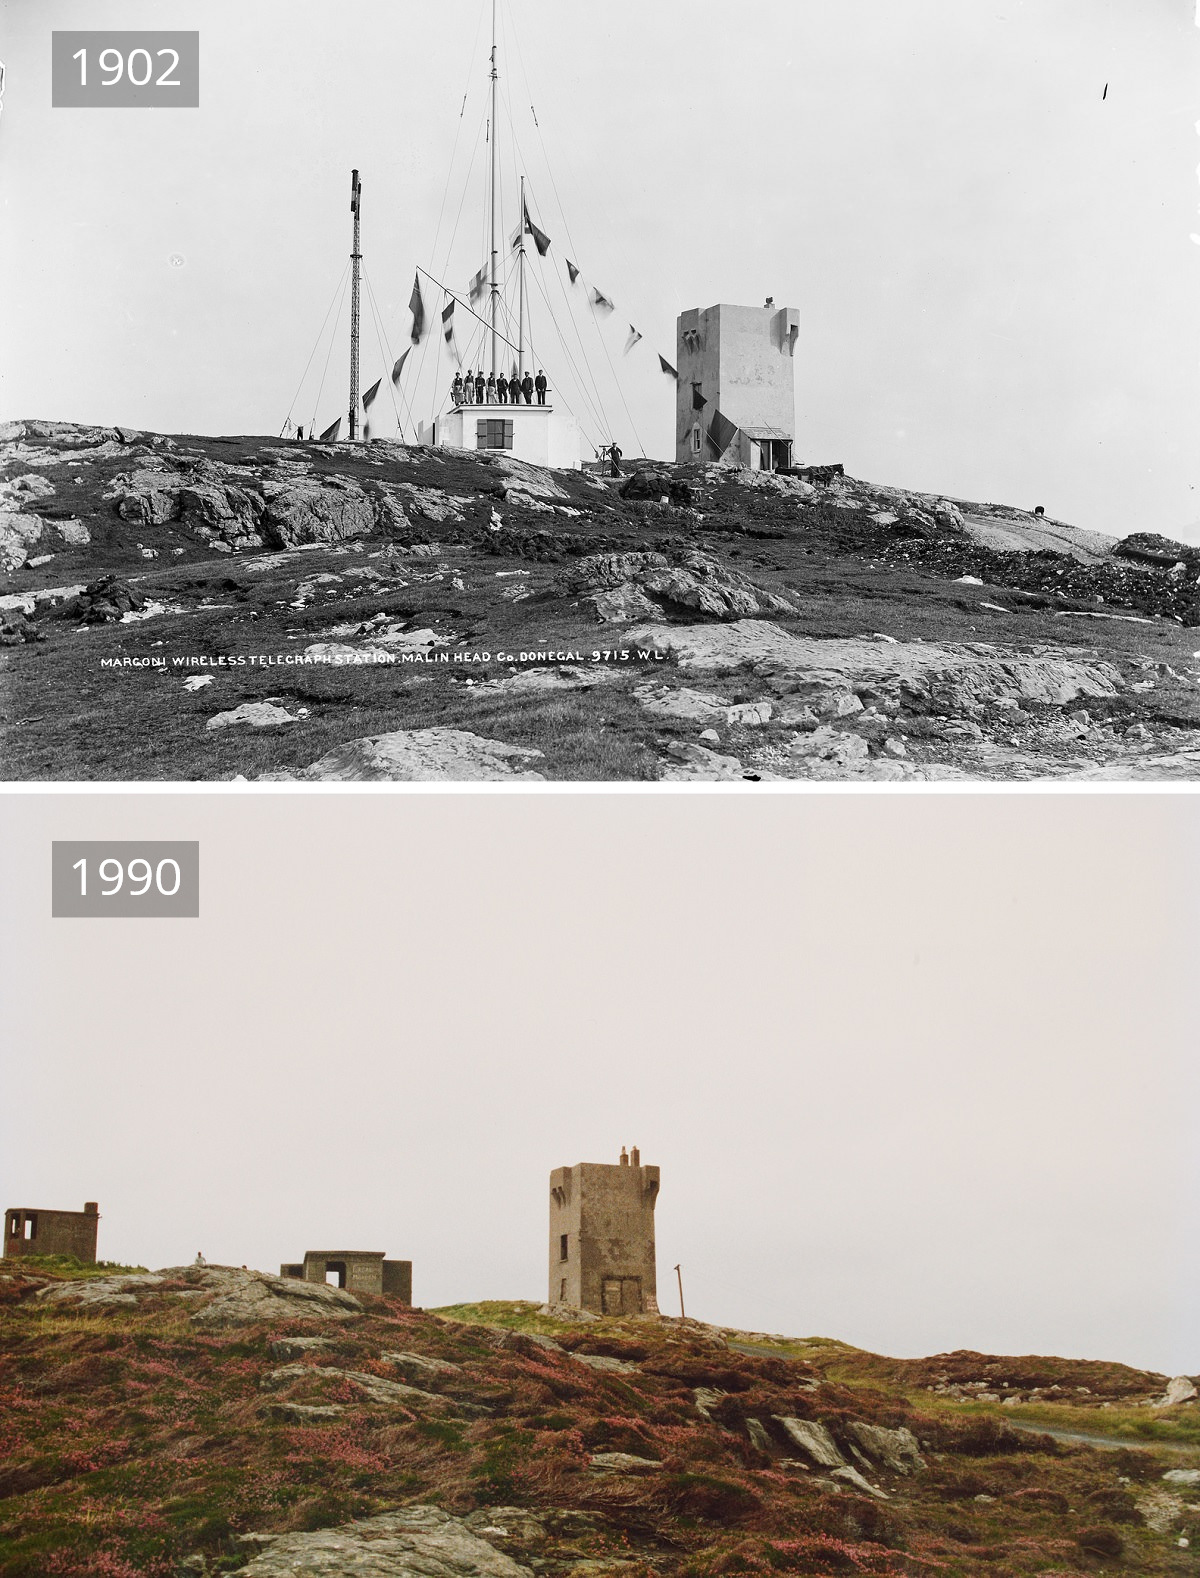 Marconi Wireless Telegraph Station, Malin Head, Donegal, 1902-1990